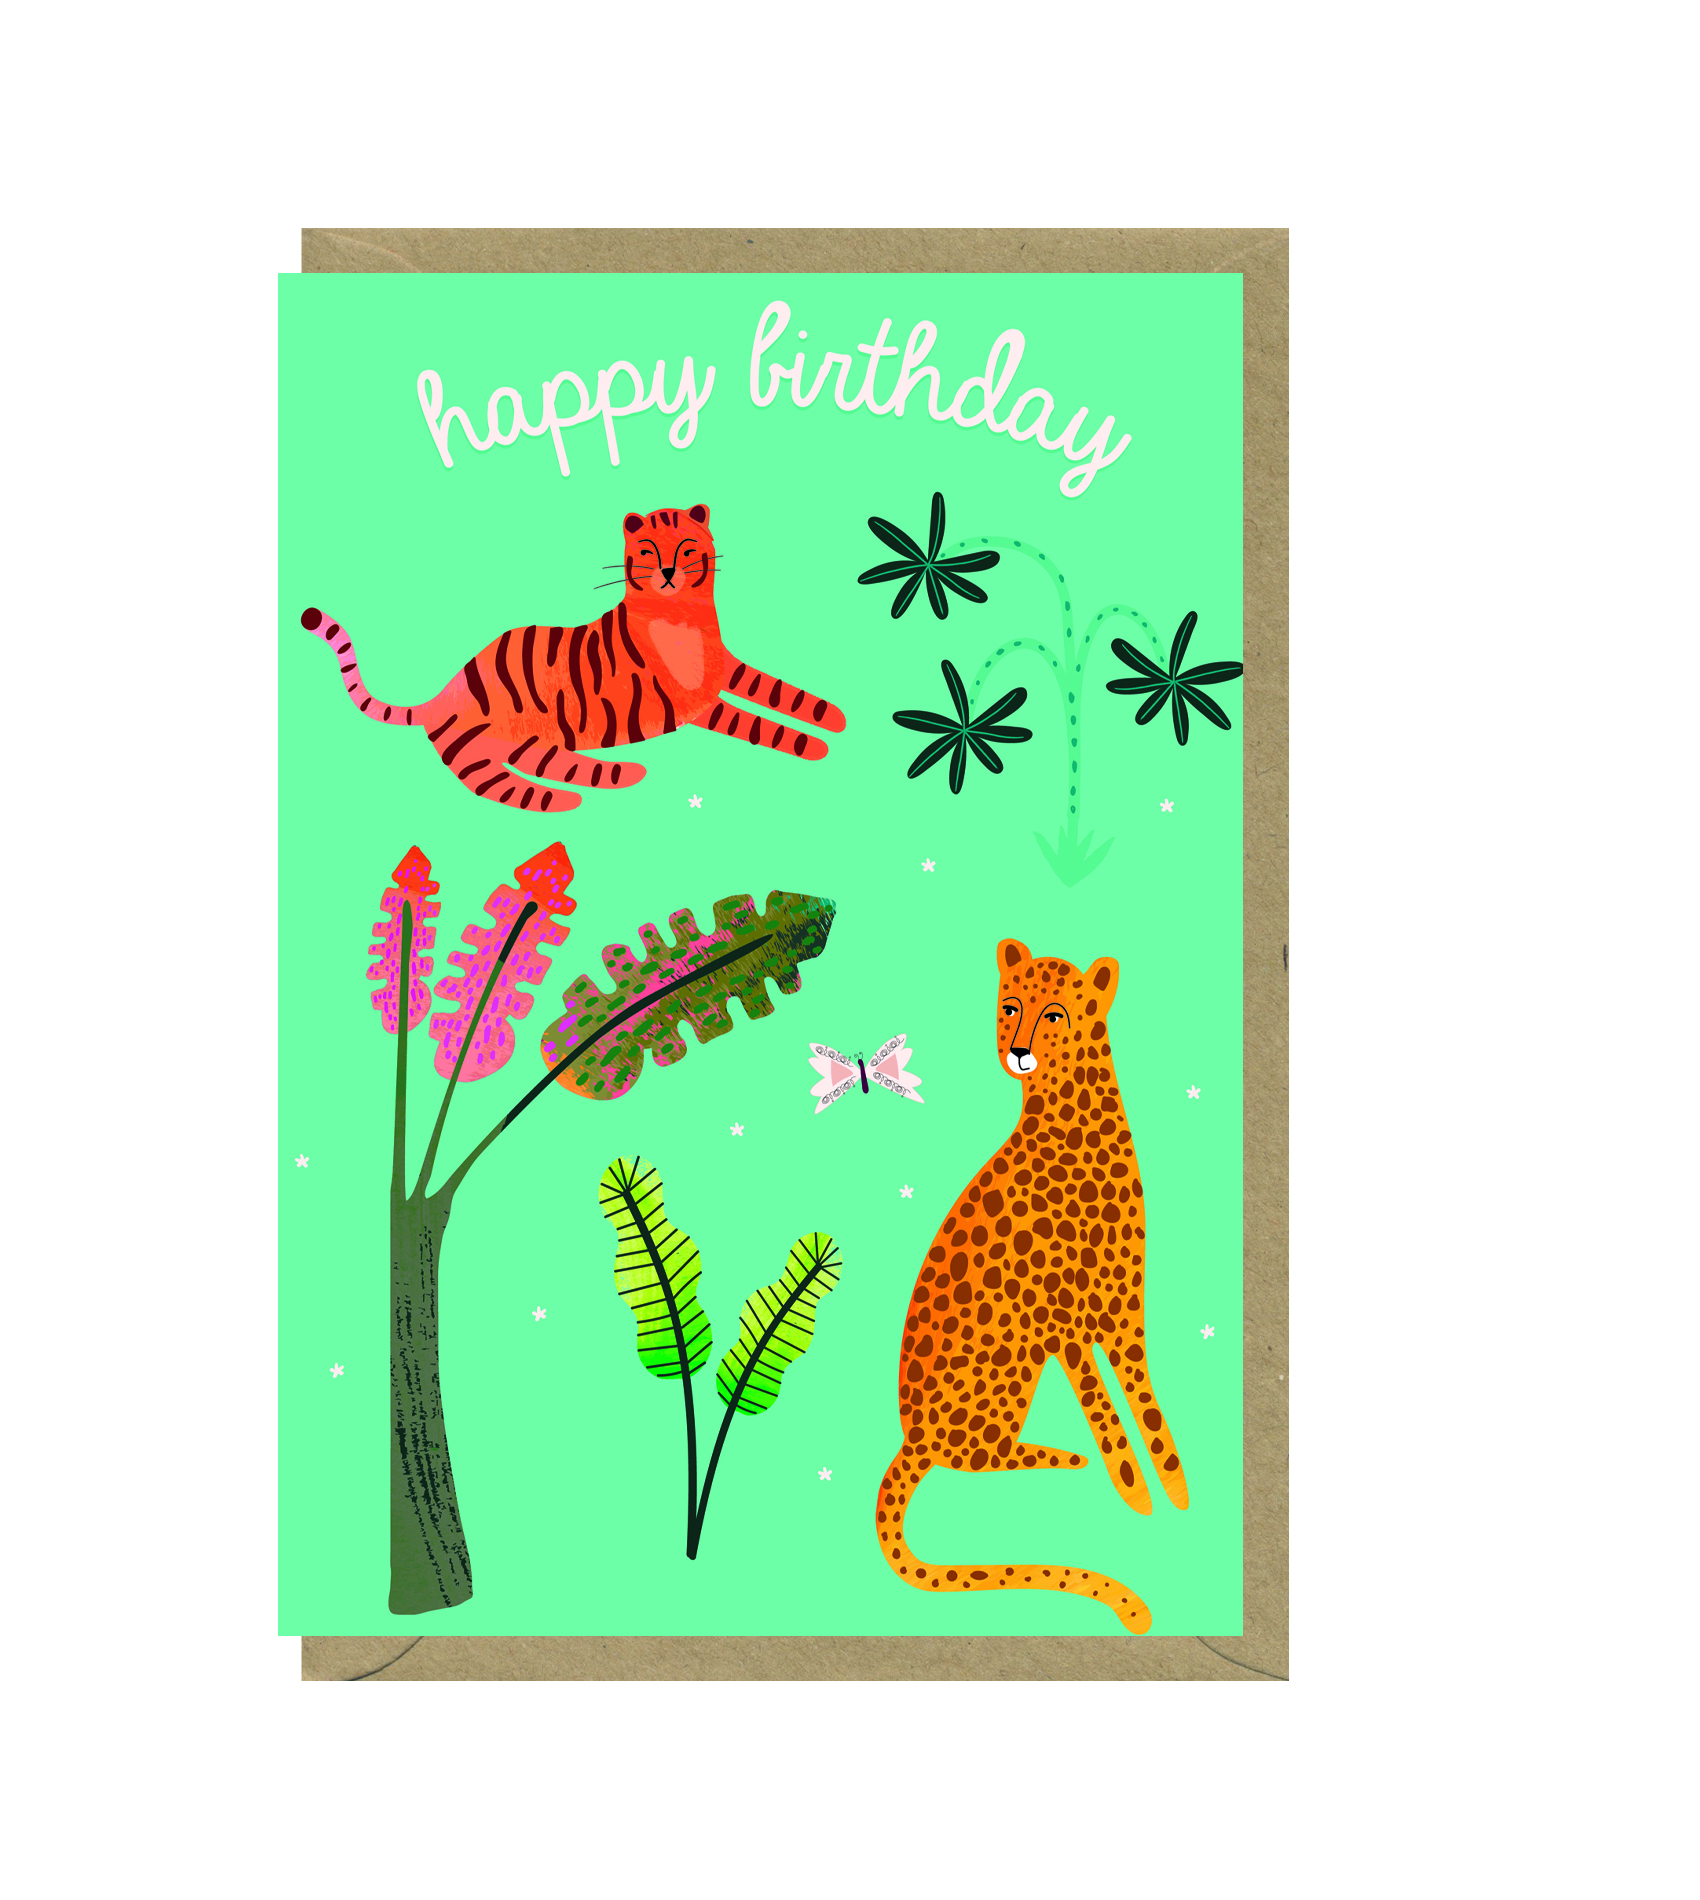 Happy birthday Tiger and cheetah card by Elana essex